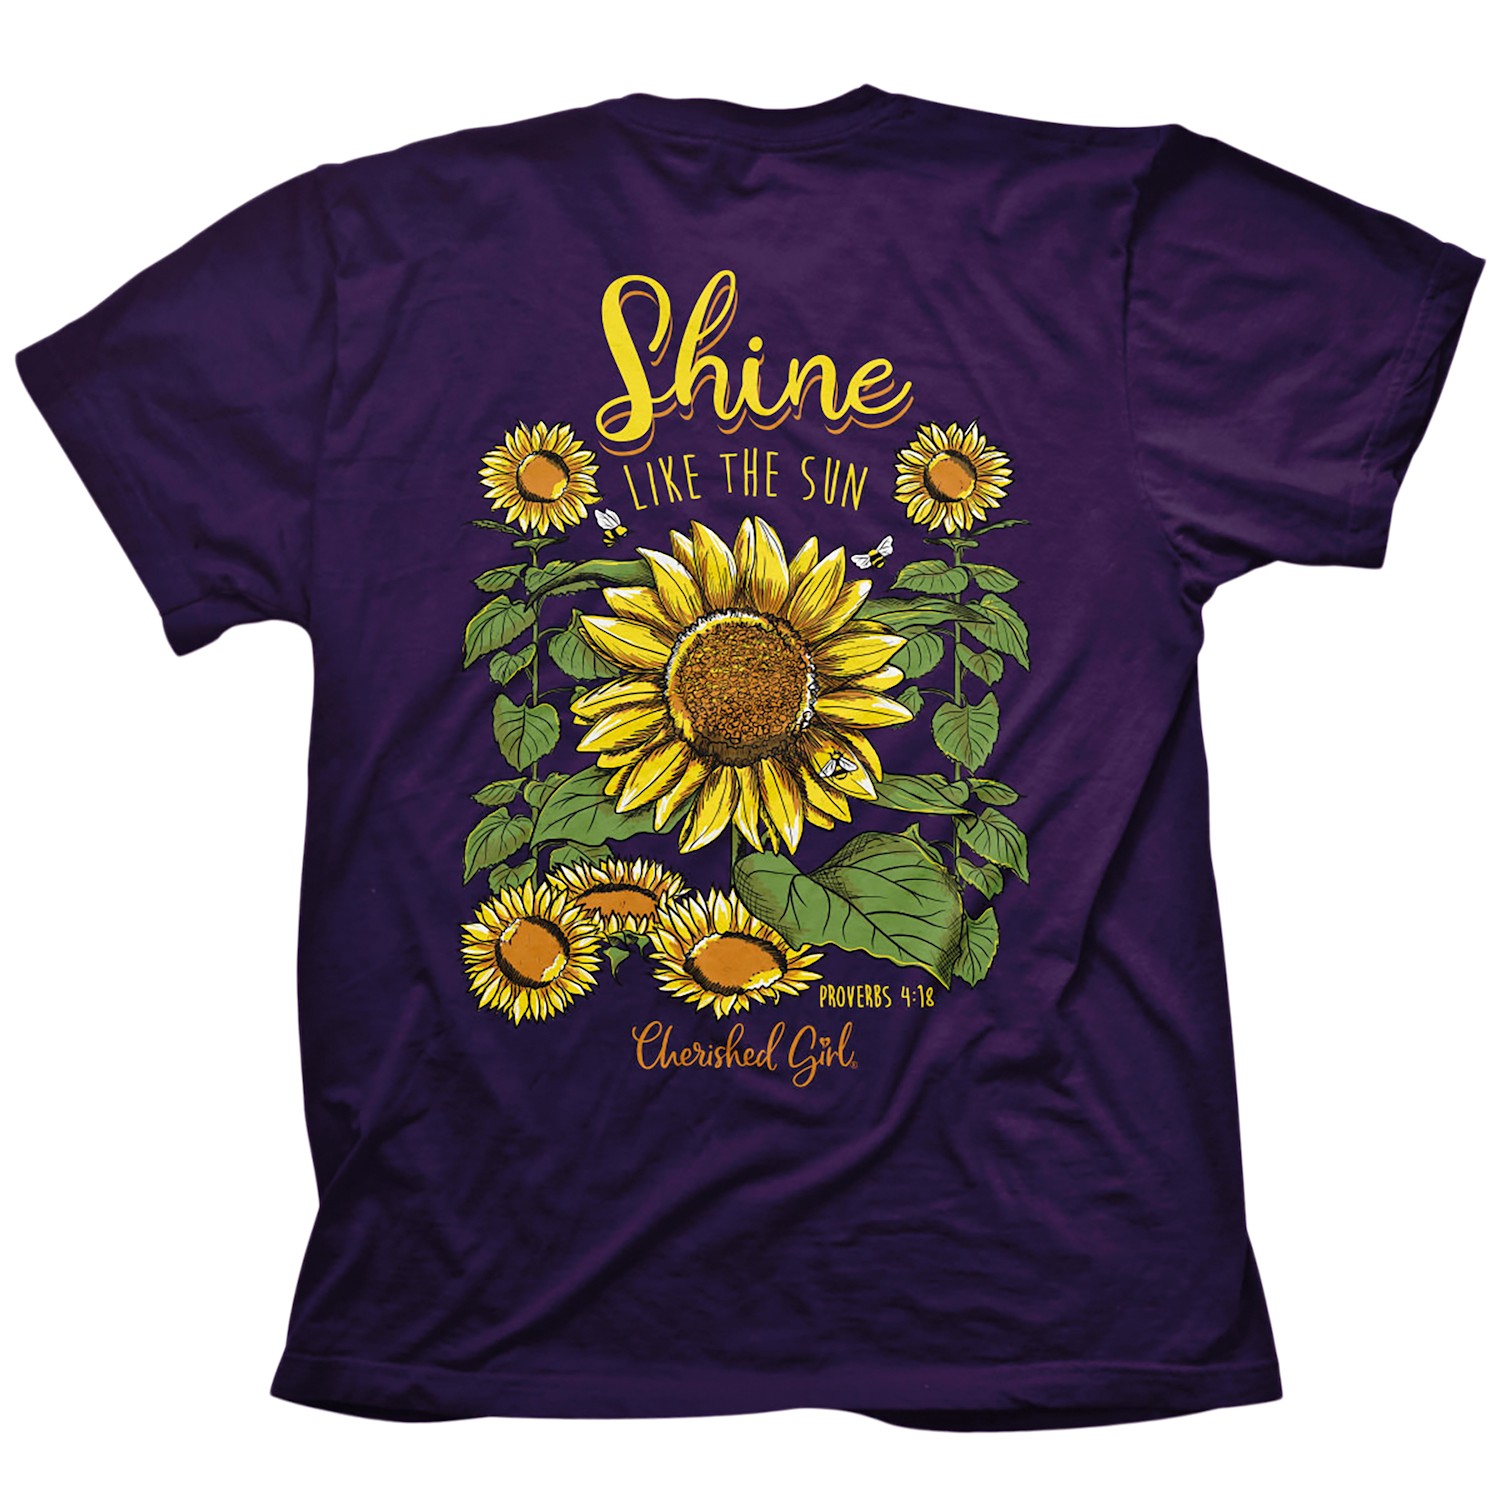 Shine Like The Sun Tee | What on Earth